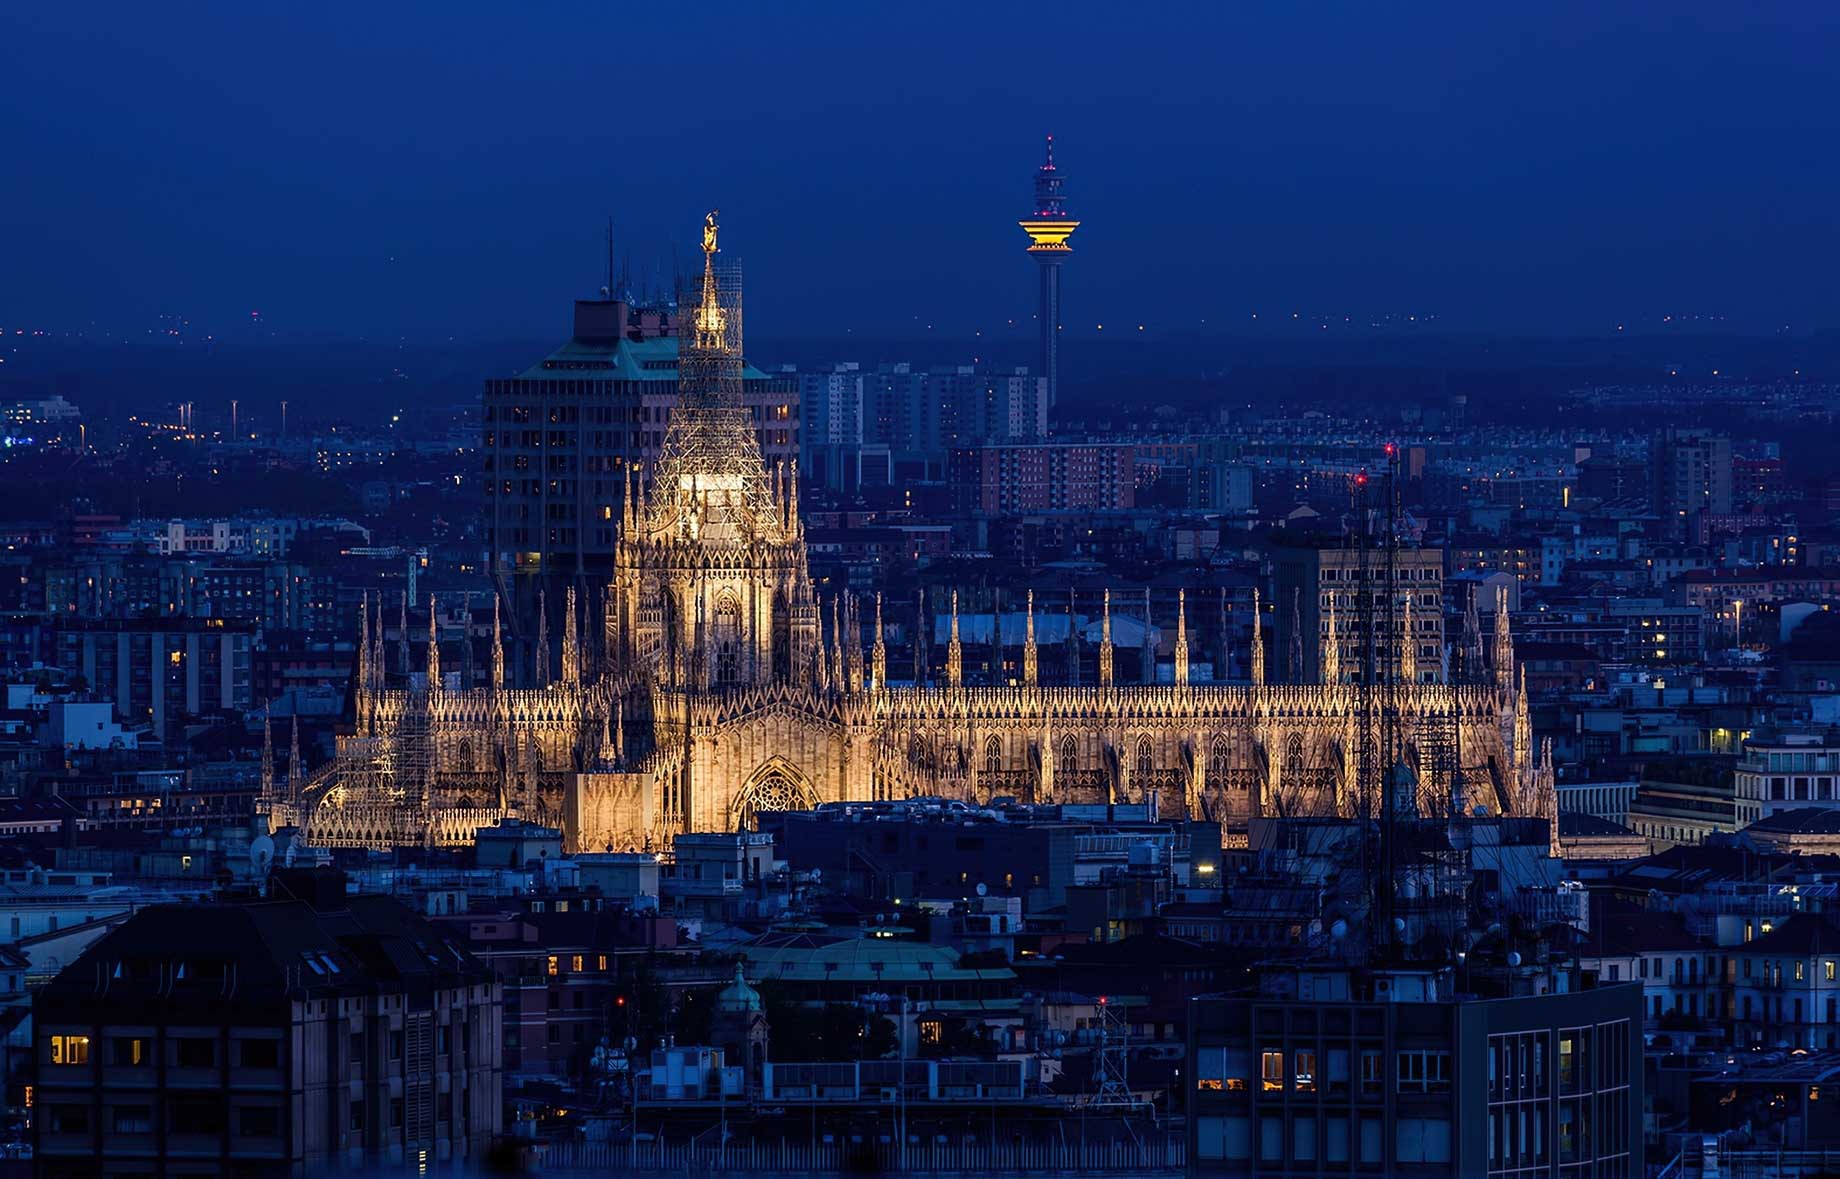 151 – Armani Hotel Milano – Milan, Italy – Milan Cathedral Night View